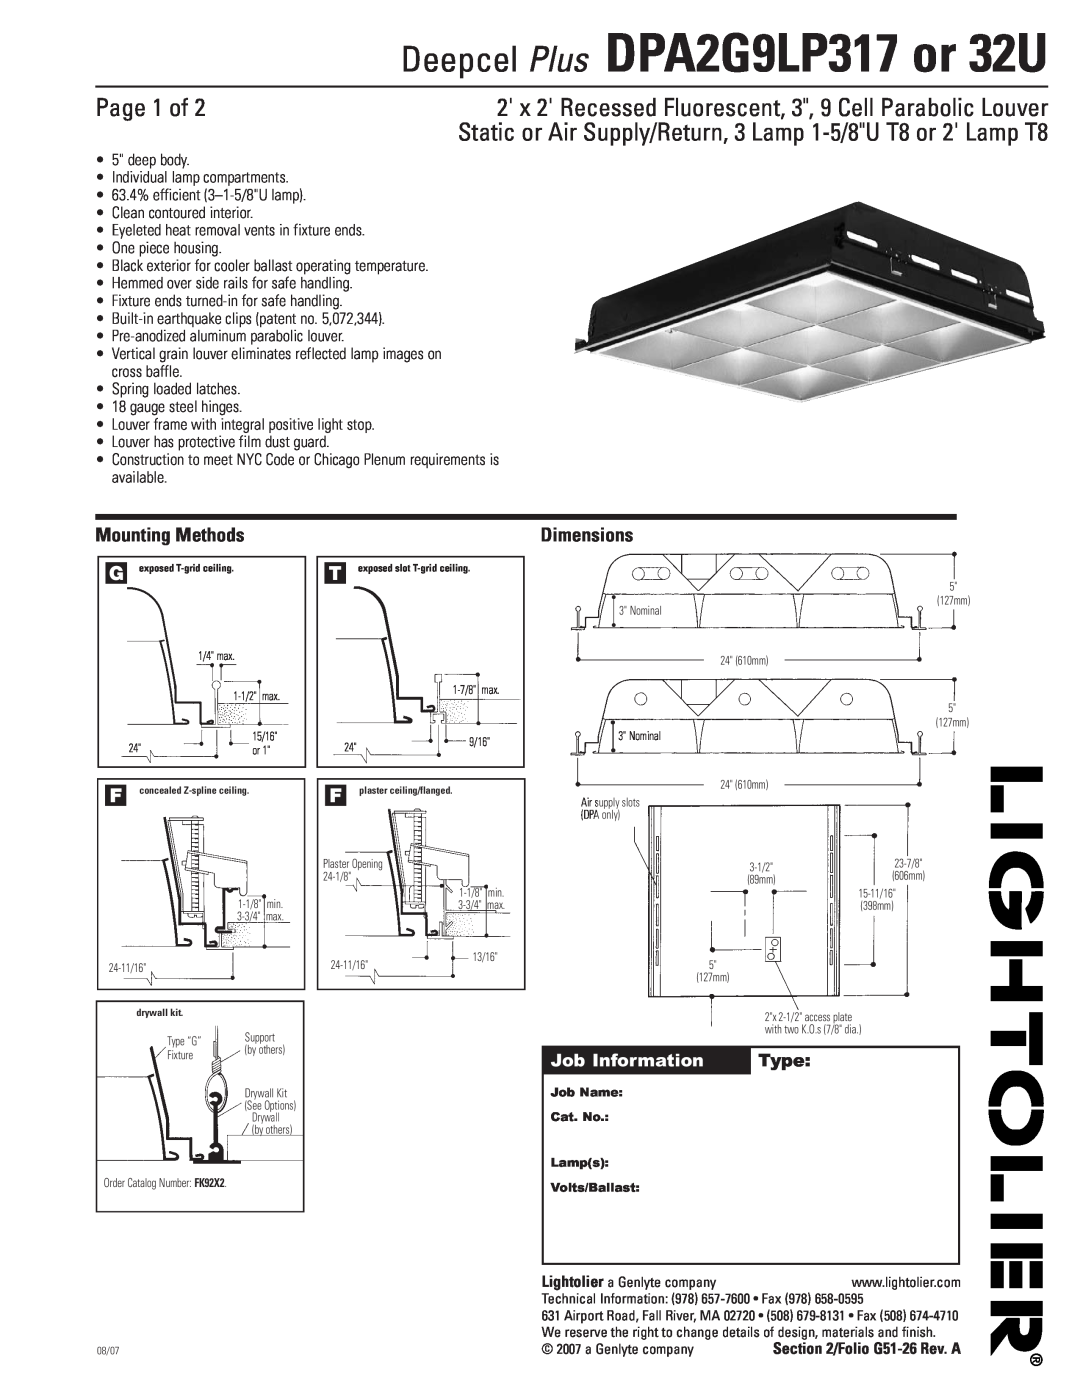 Lightolier dimensions Page 1 of, Mounting Methods, Dimensions, Type, Deepcel Plus DPA2G9LP317 or 32U, Job Information 